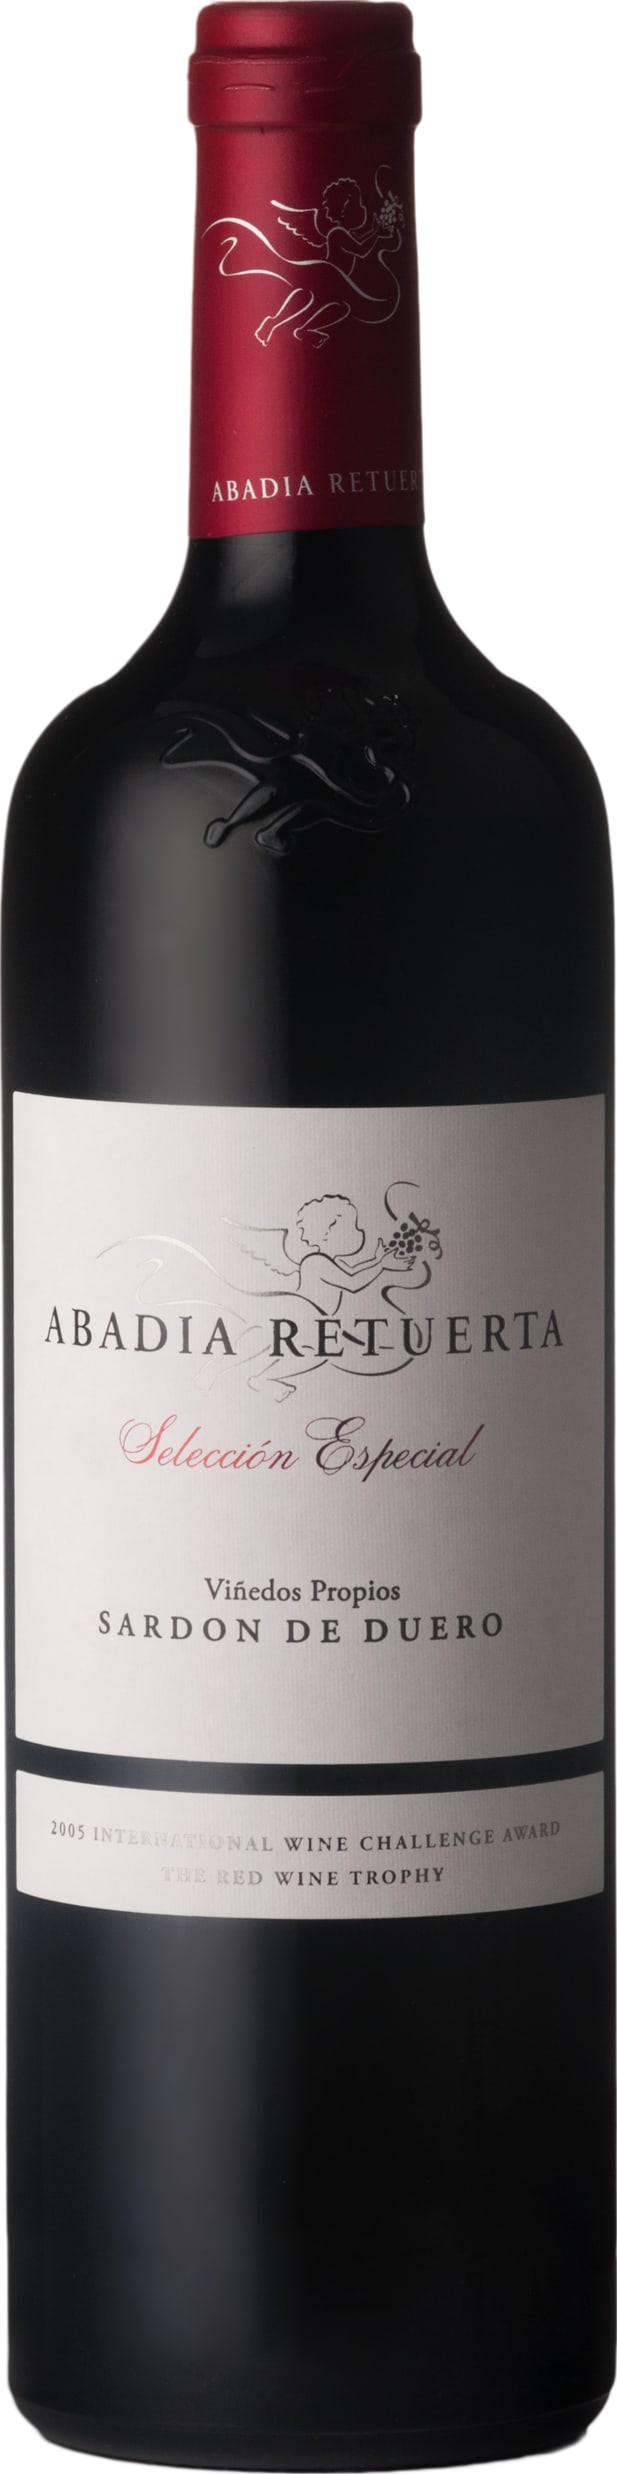 Abadia Retuerta Seleccion Especial 2019 75cl - Buy Abadia Retuerta Wines from GREAT WINES DIRECT wine shop